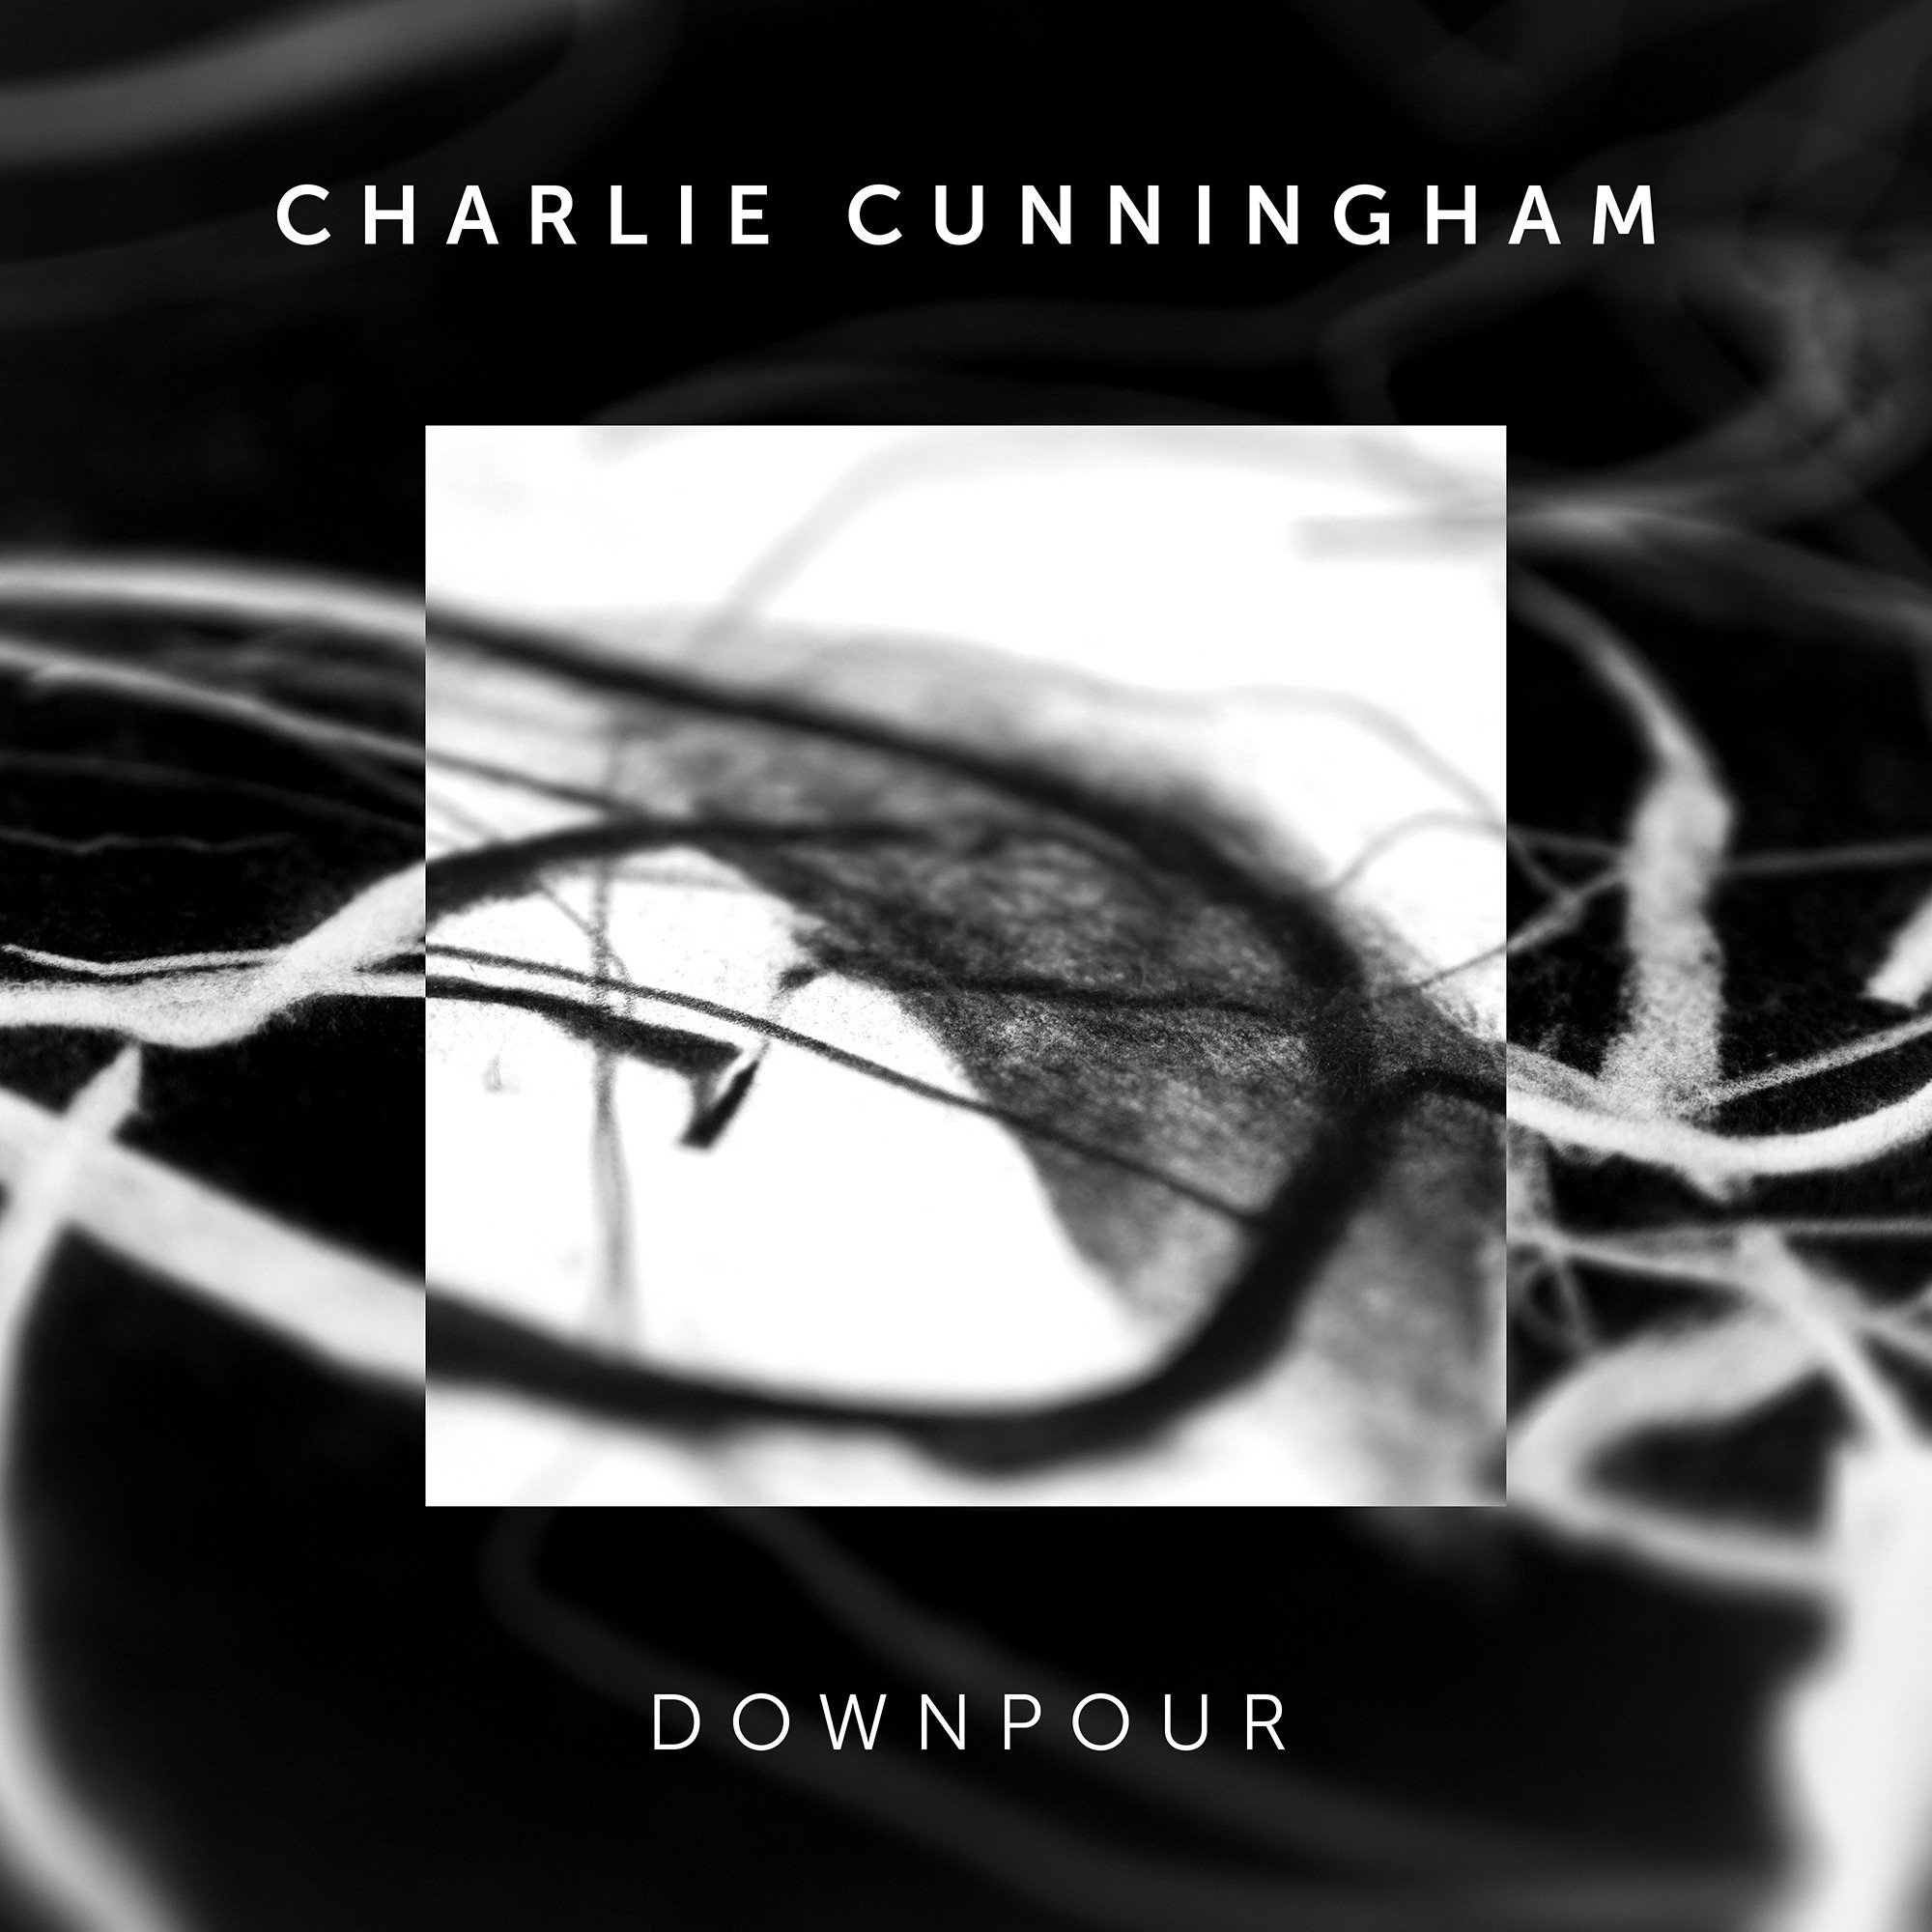 Charlie Cunningham “Downpour” single artwork